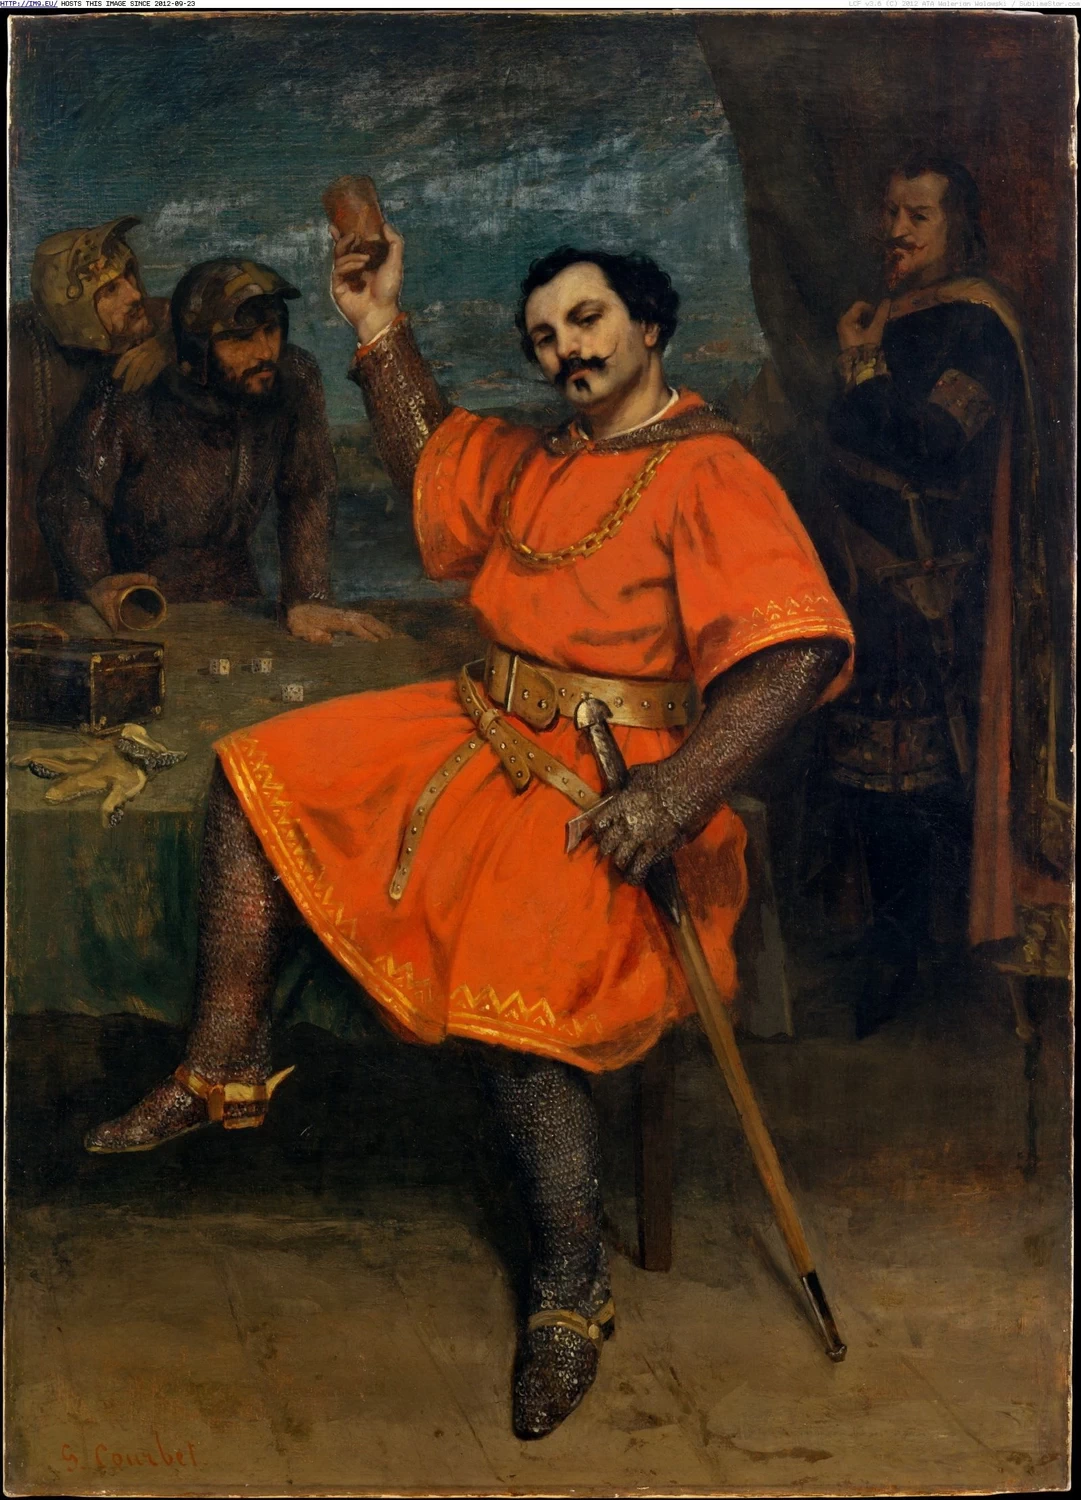  249-Ritratto di Louis Gueymard as Robert le Diable-Metropolitan Museum of Art-New York 